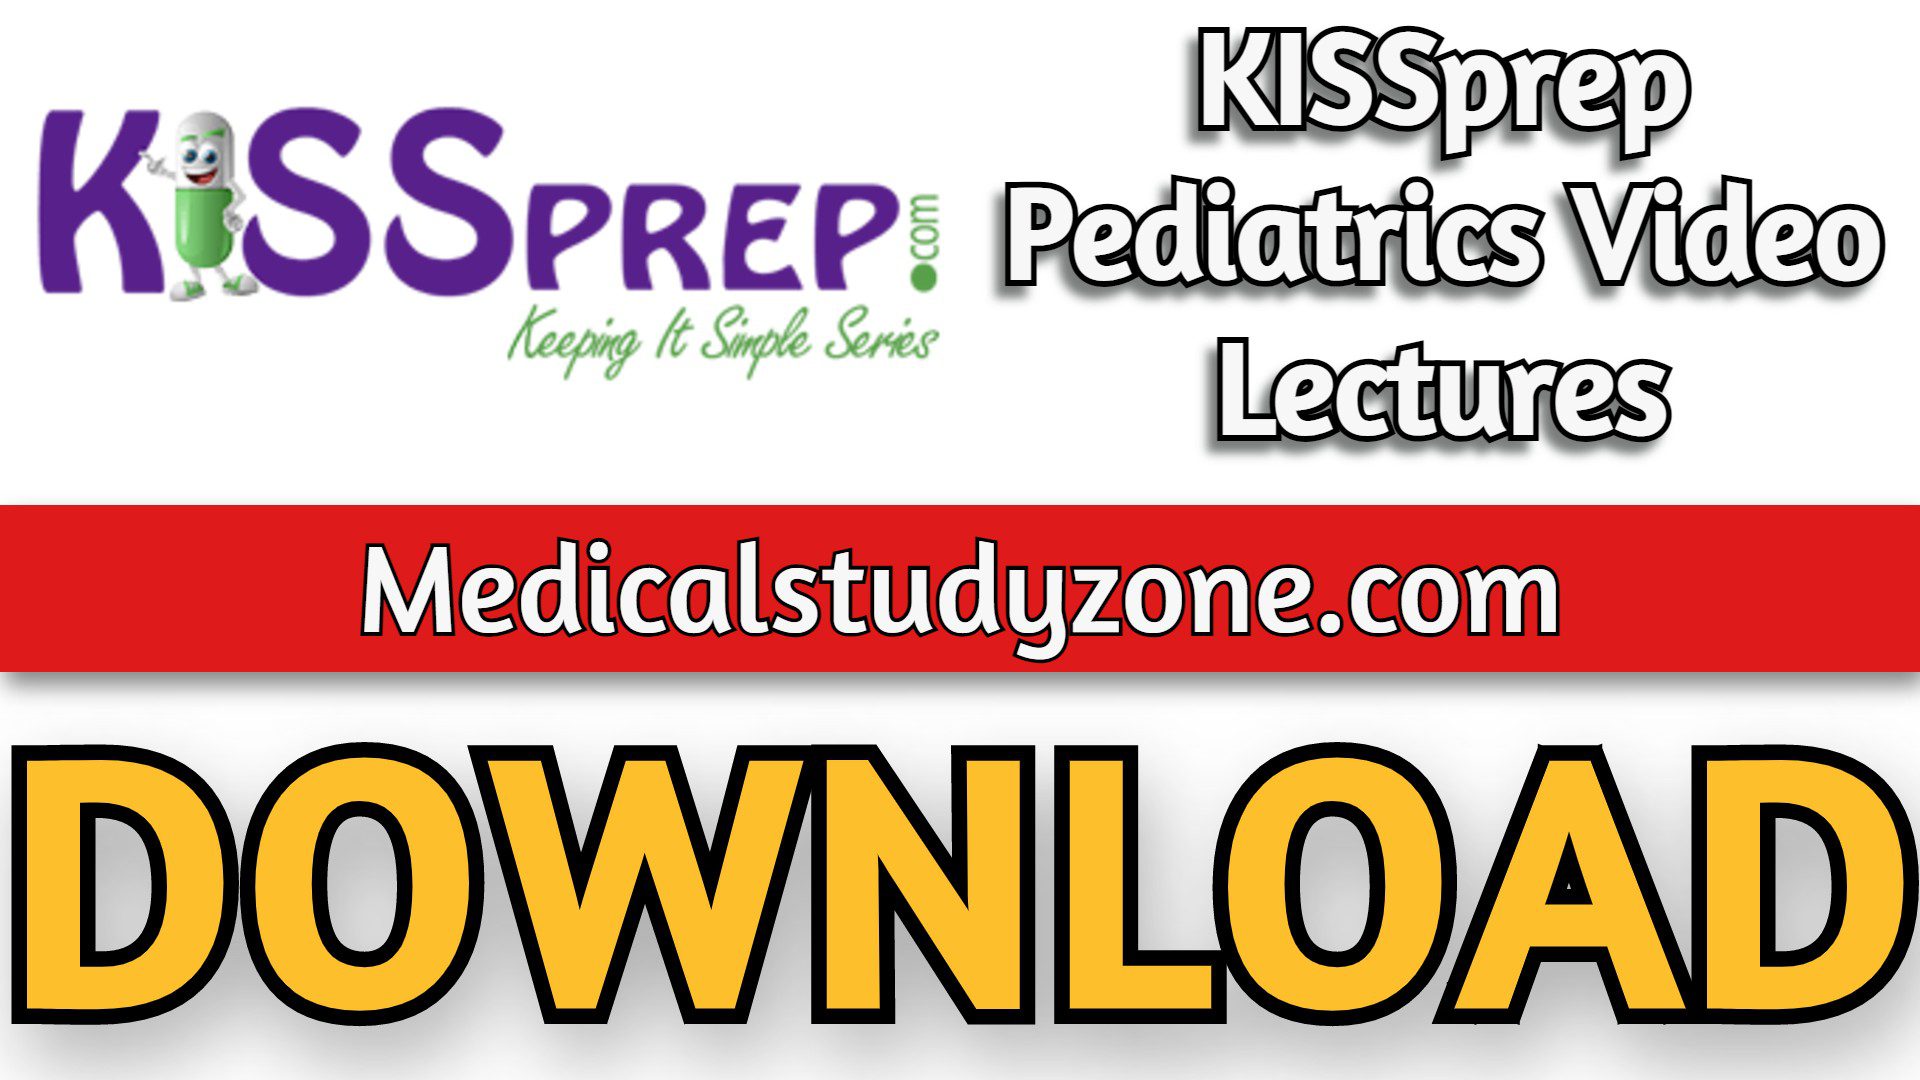 KISSprep Pediatrics Video Lectures 2021 Free Download